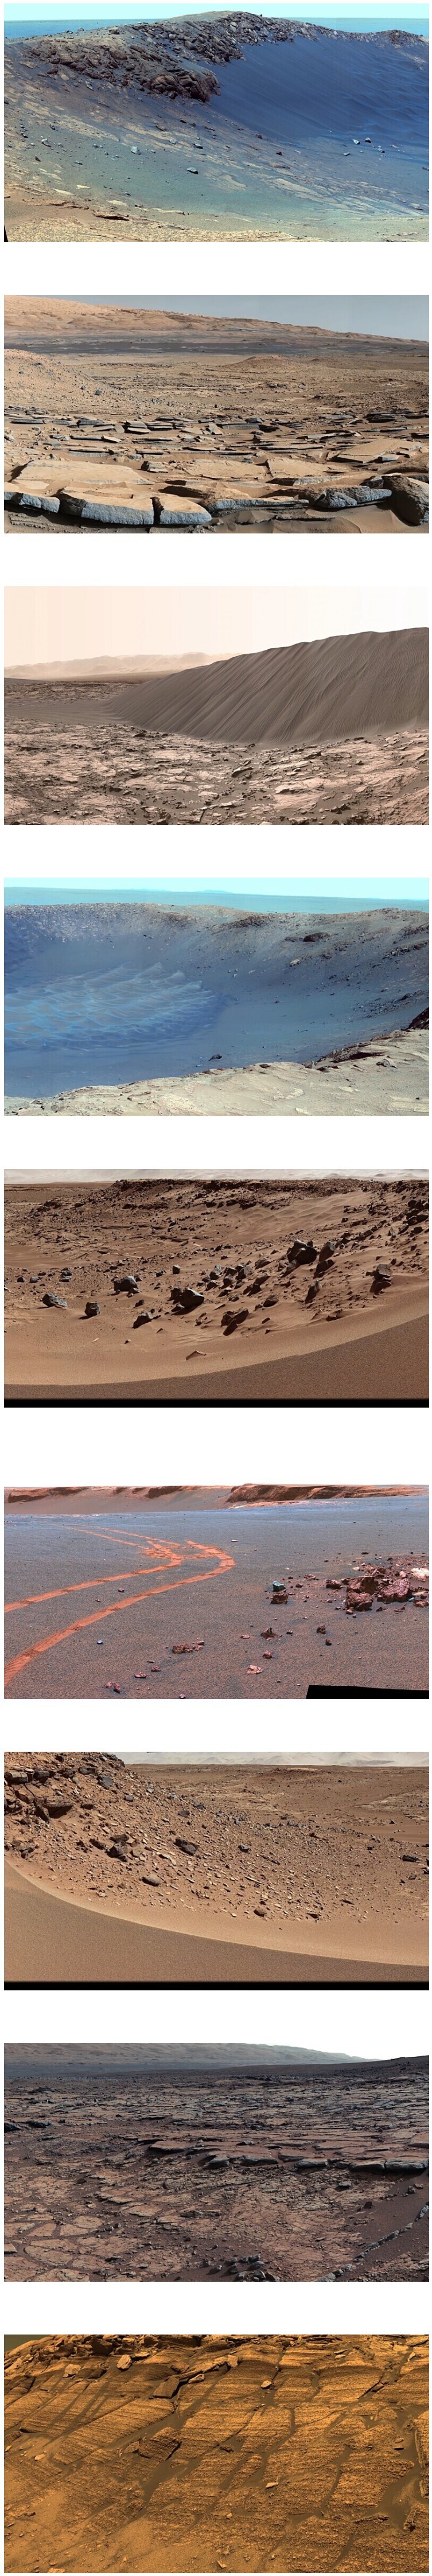 Mars photo released by NASA.jpg